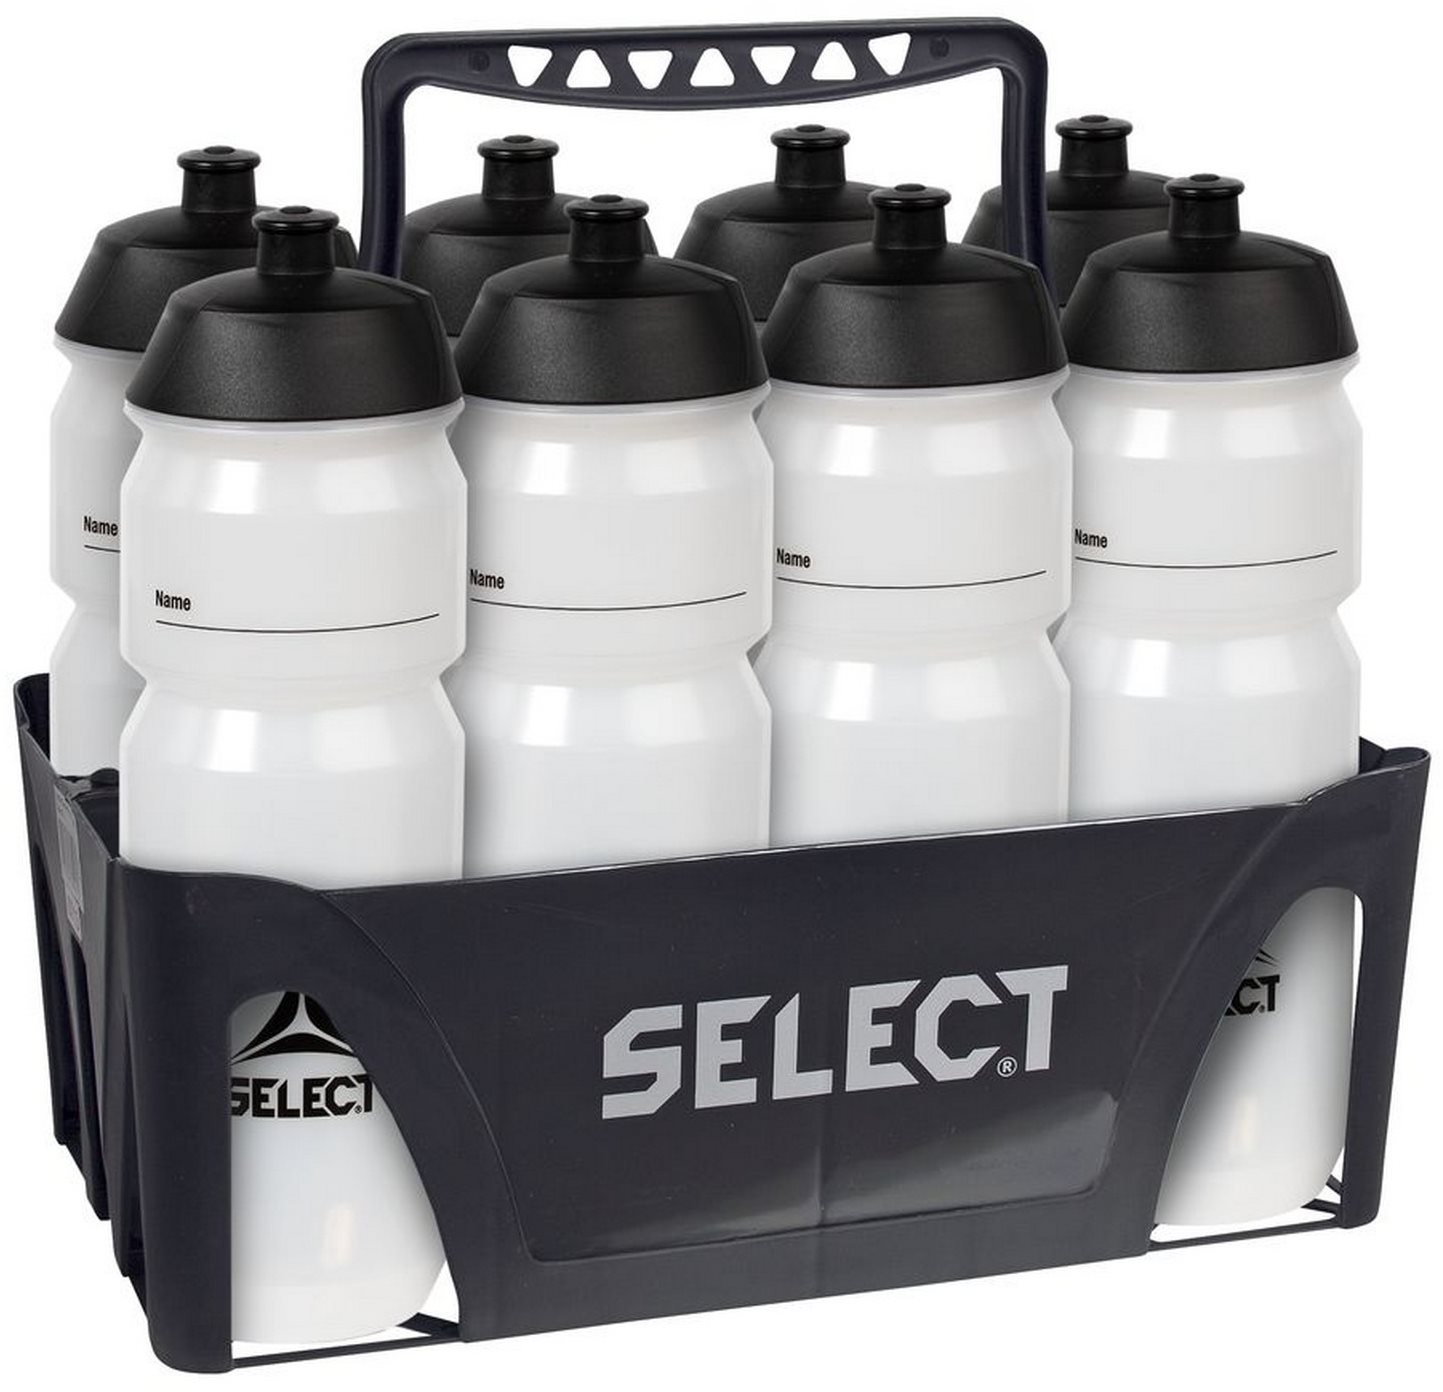 Palackhordozó Select Bottle Carrier